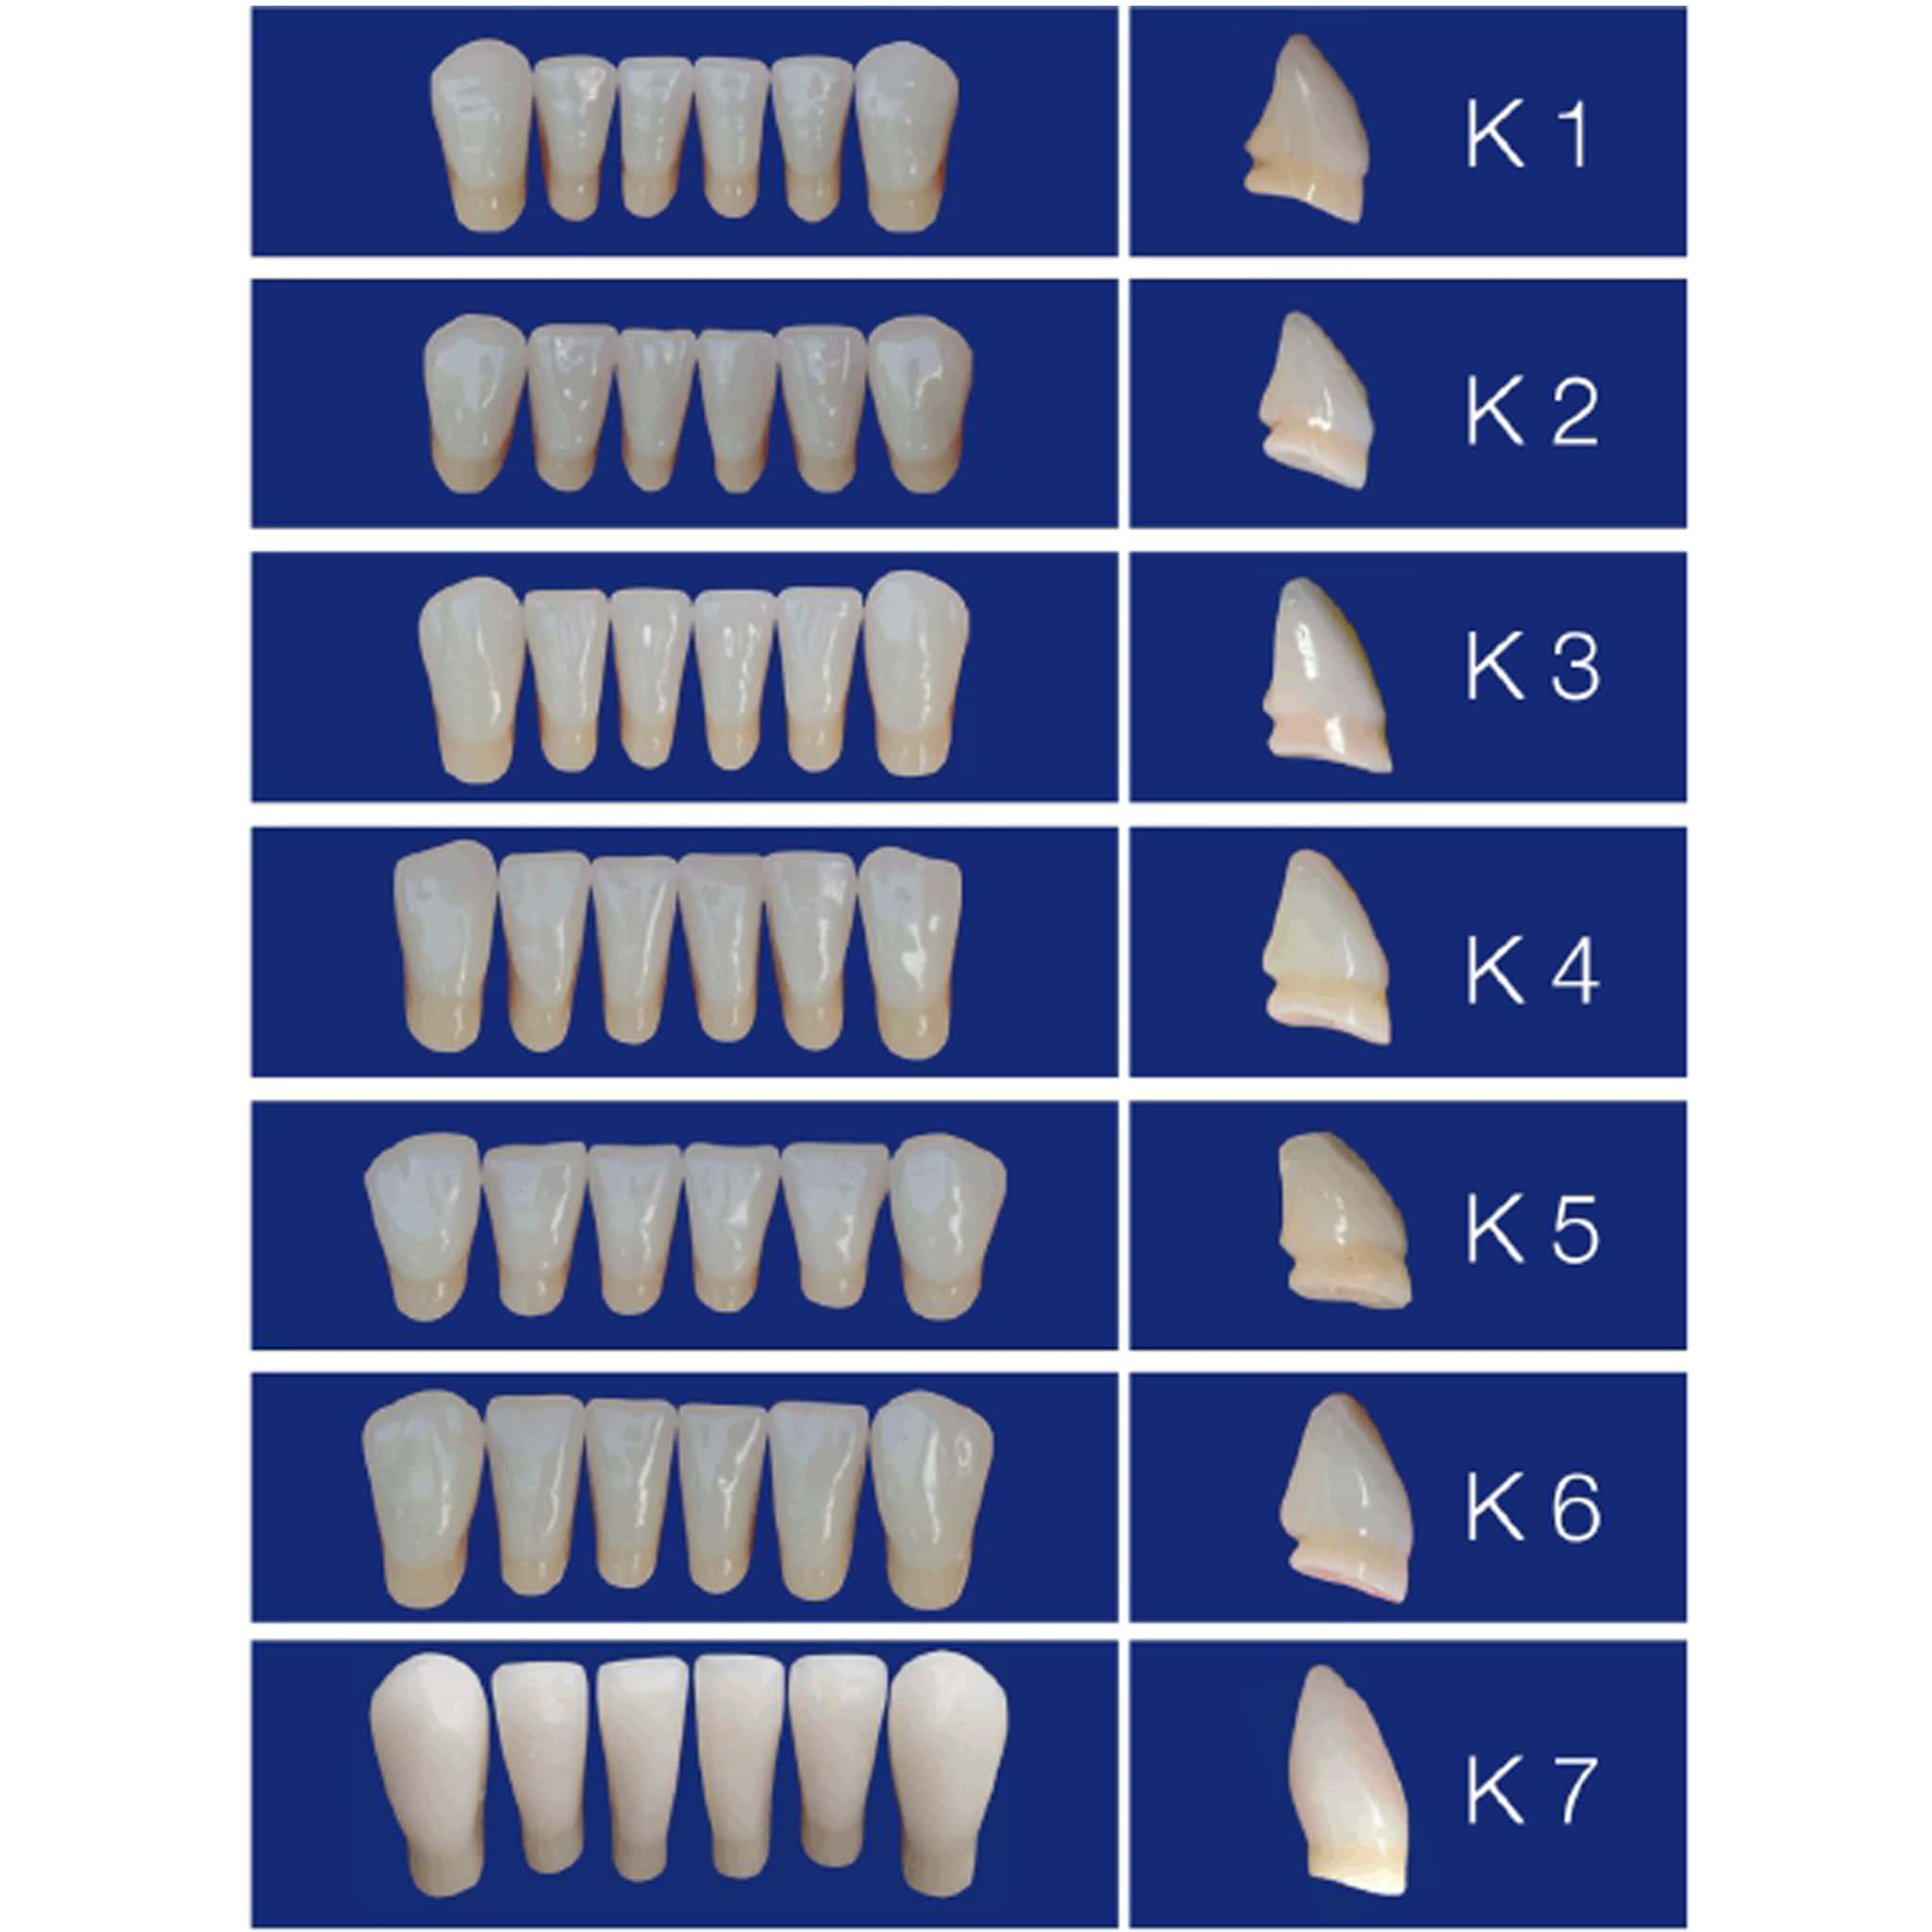 MR Dental V-Lux 3 Layer Full Set B3 Shade (Box of 4)